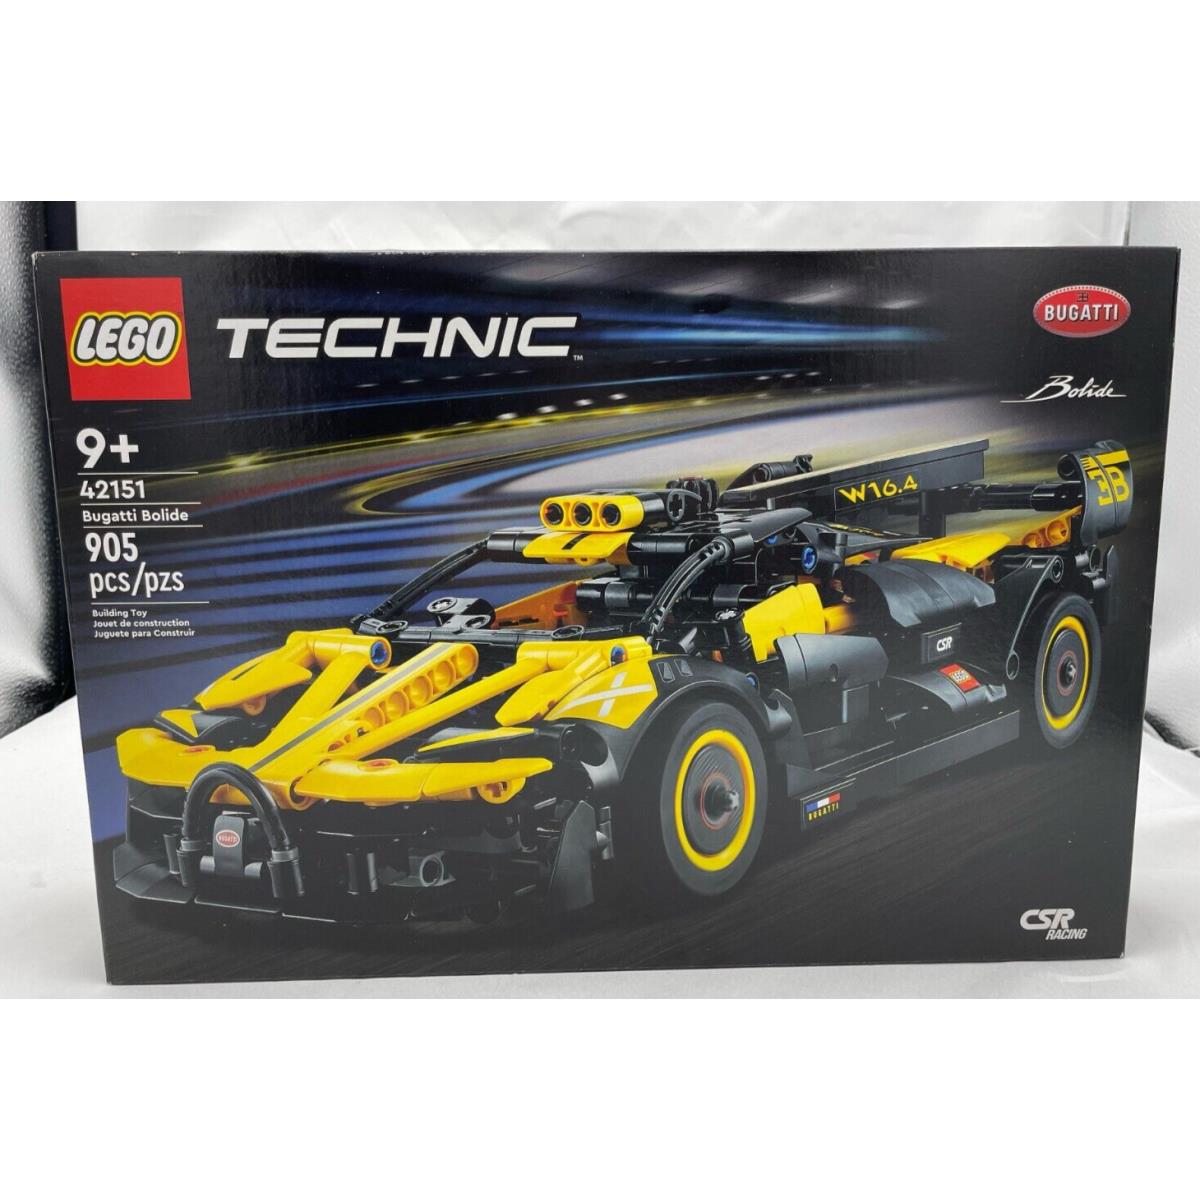 Lego Technic Csr Racing Bugatti Bolide Ages 9+ 42151 905 Piece Building Toy